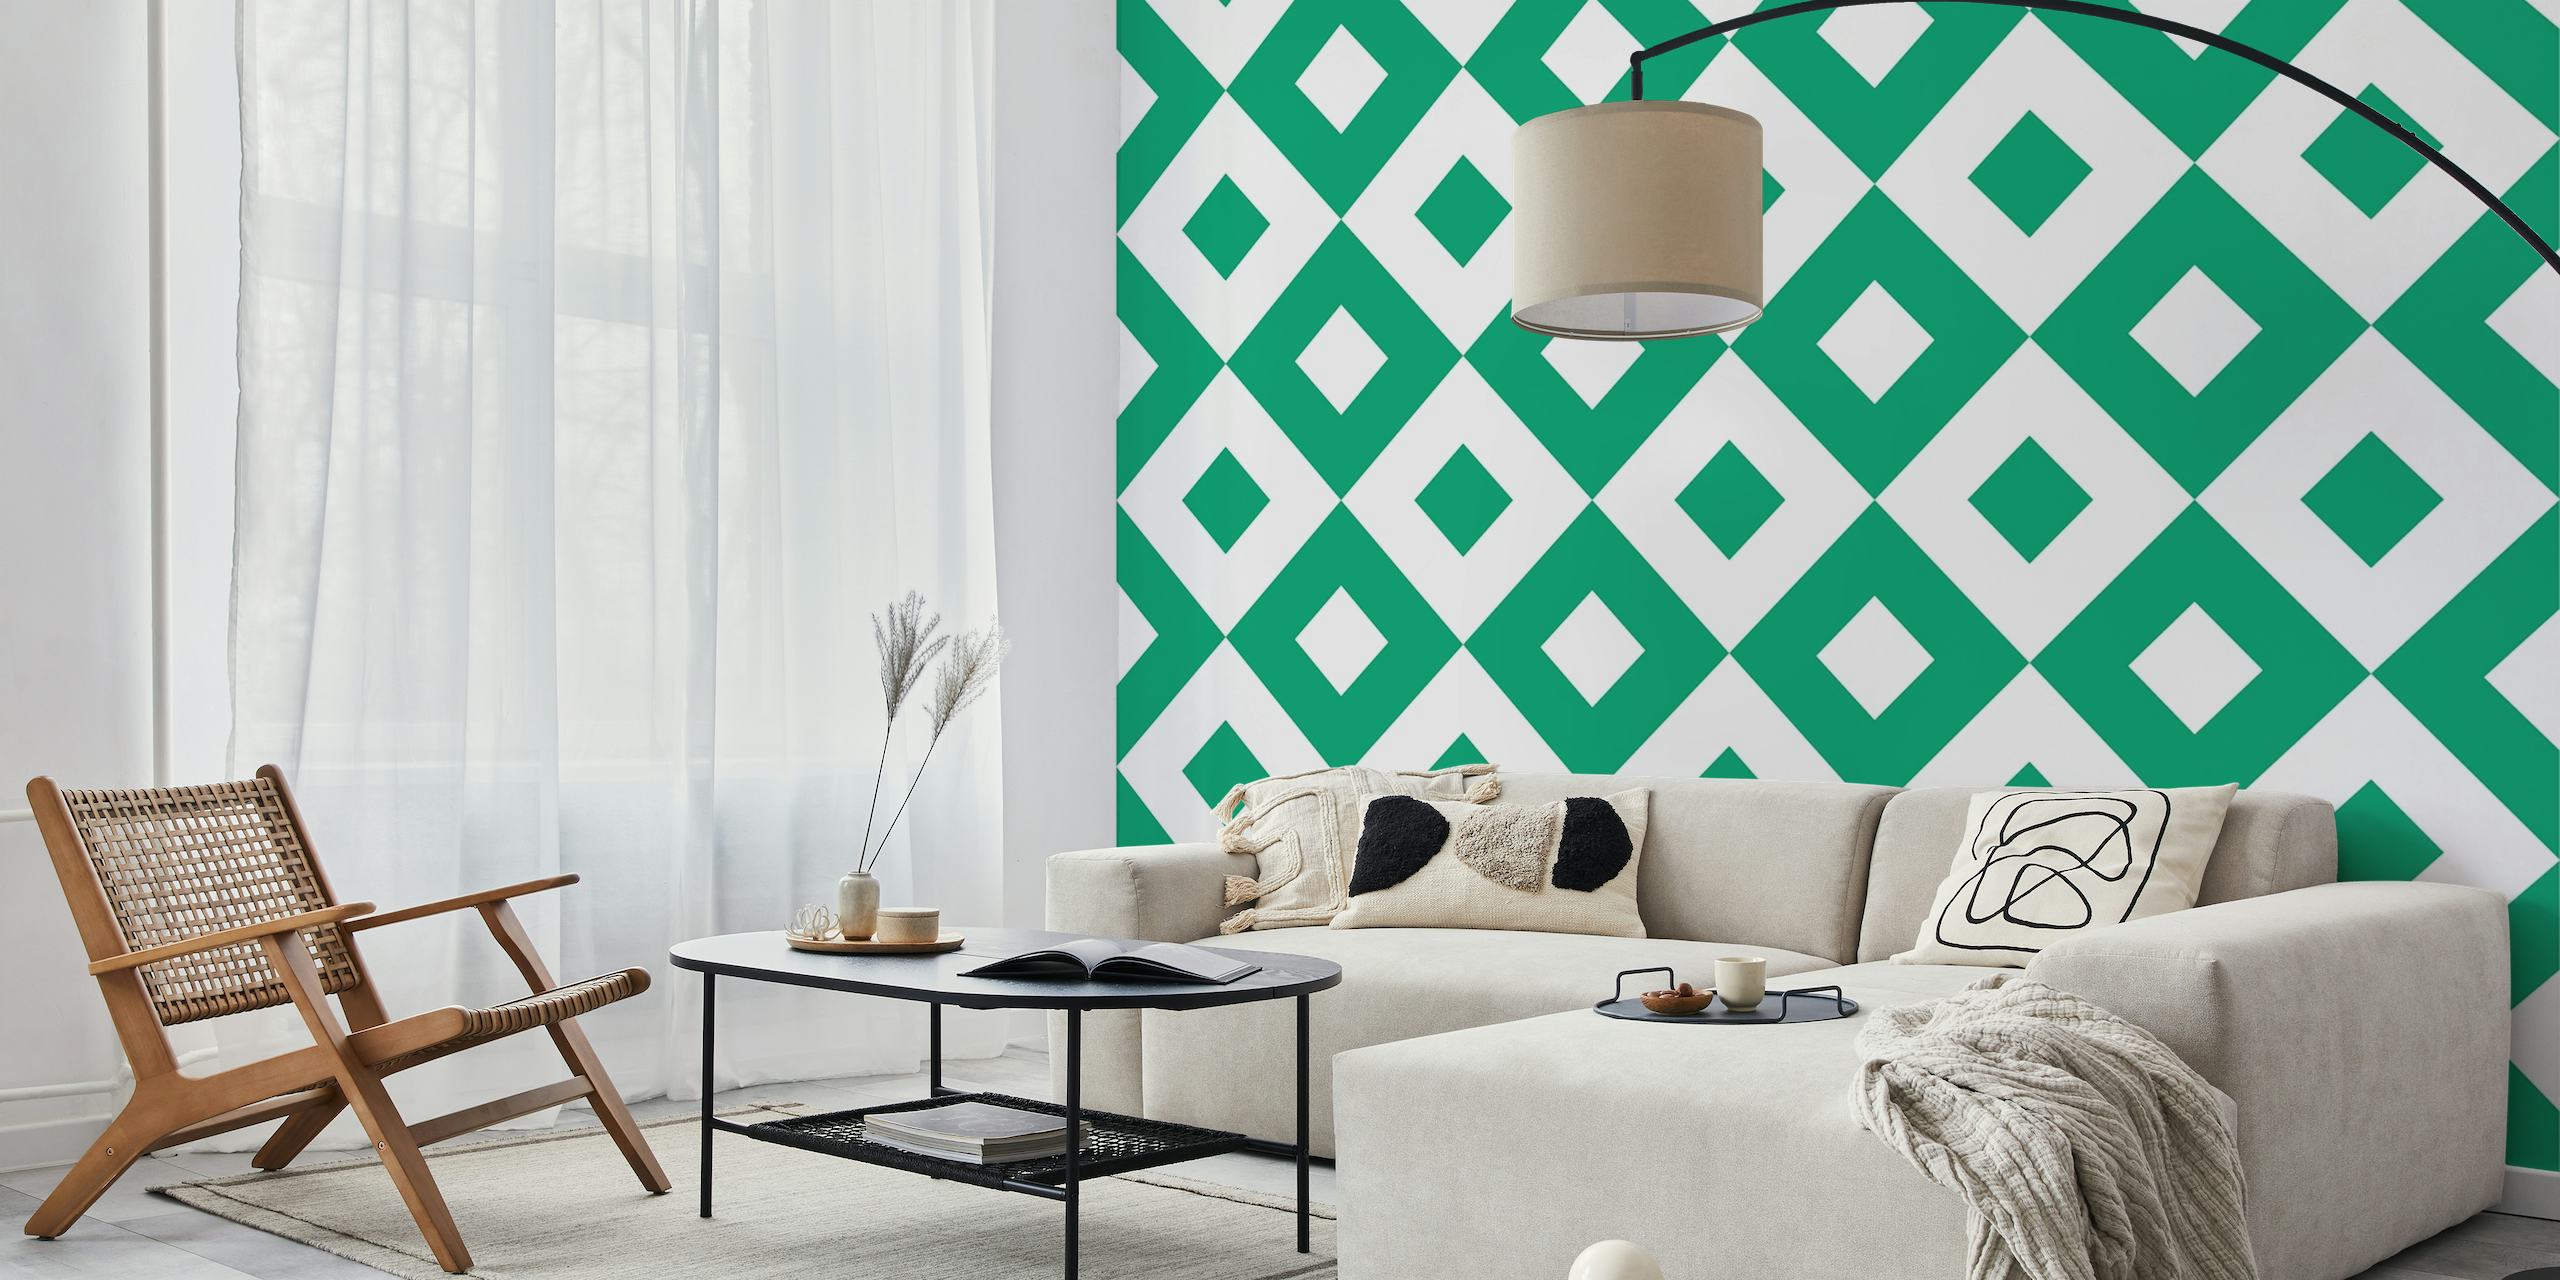 Diamonds pattern design in green and white wallpaper